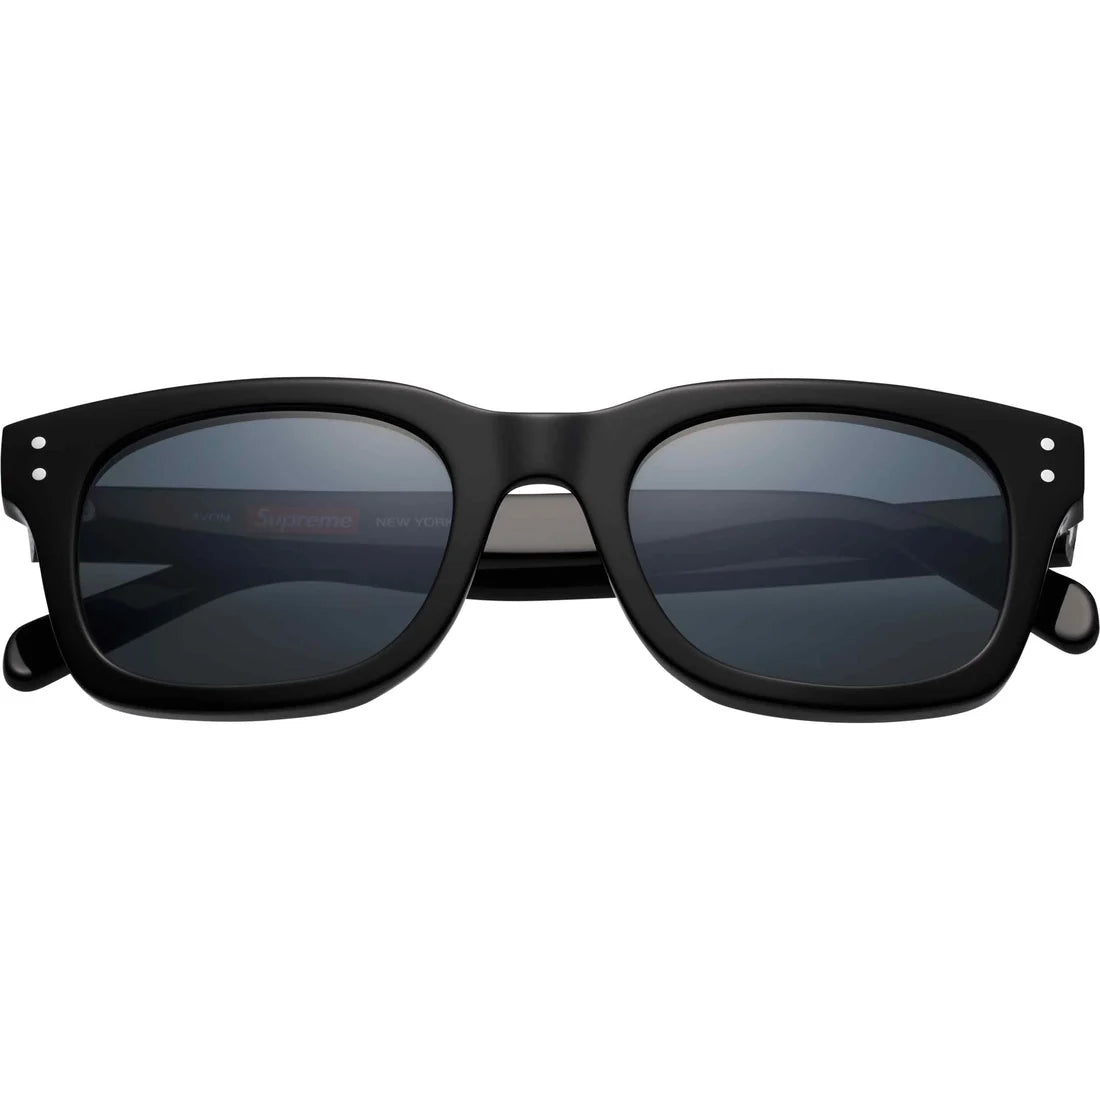 Supreme Avon Sunglasses Black